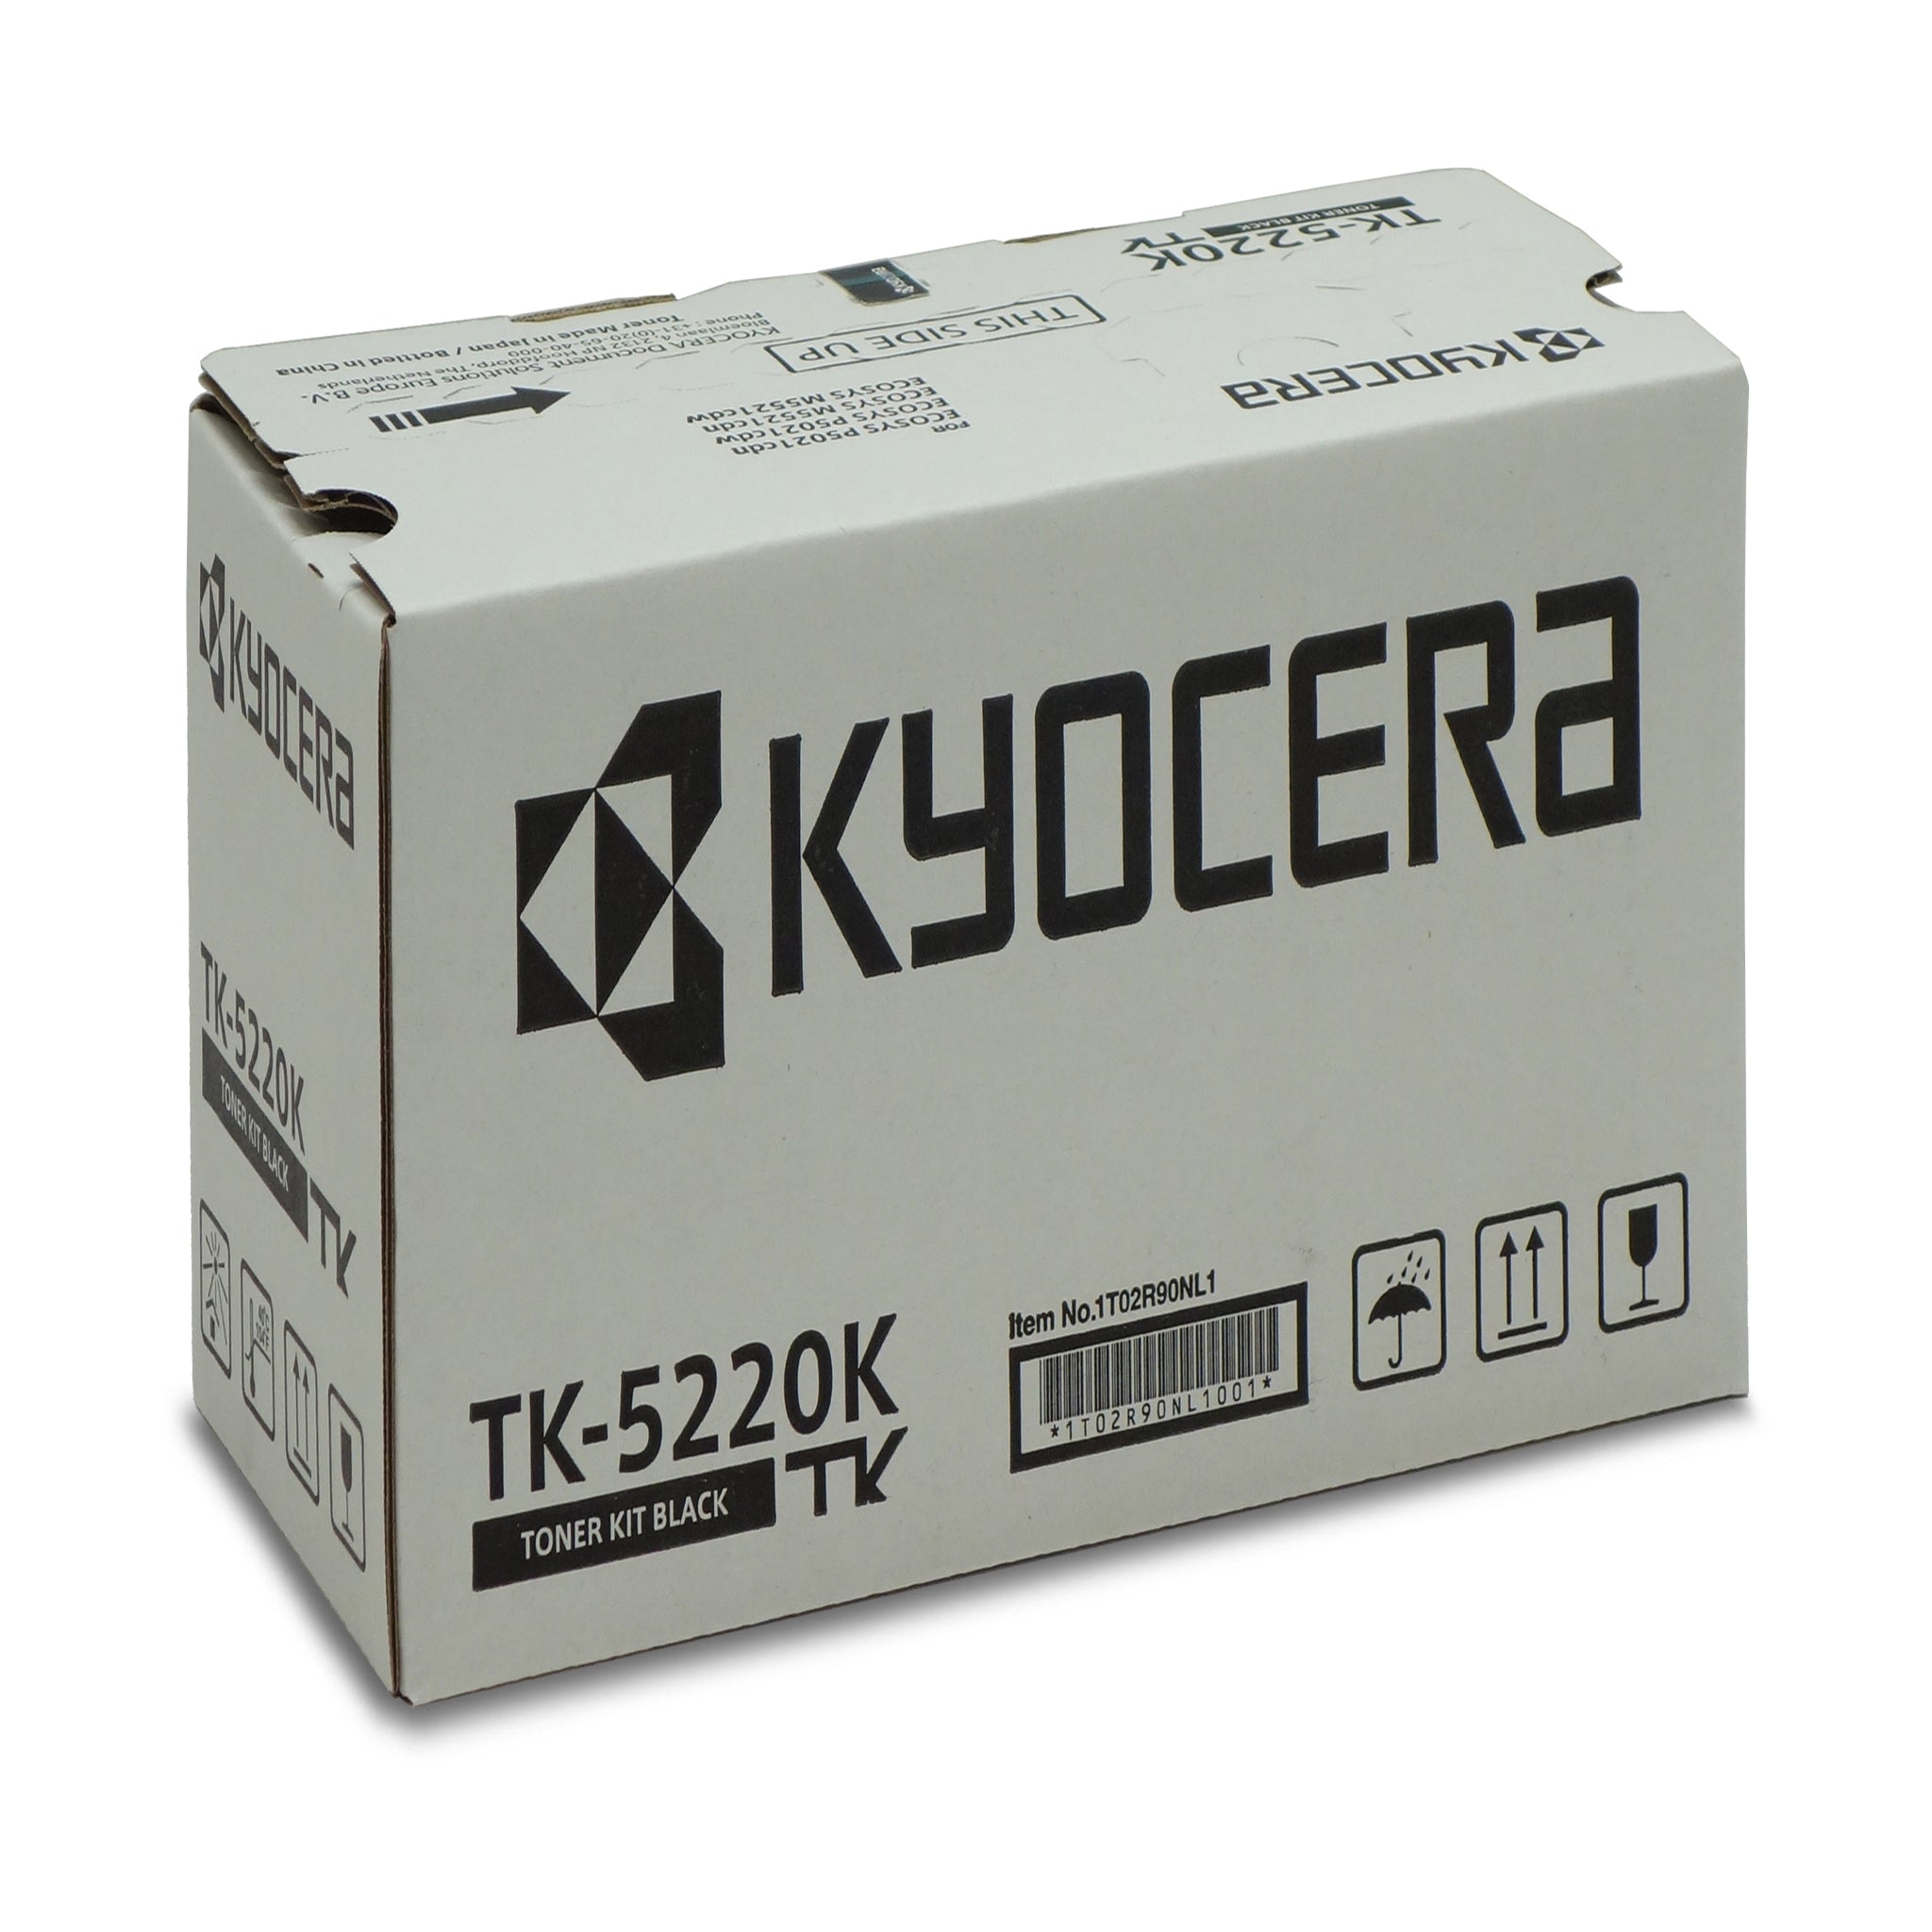 Toner cartridge original for Kyocera TK-5220